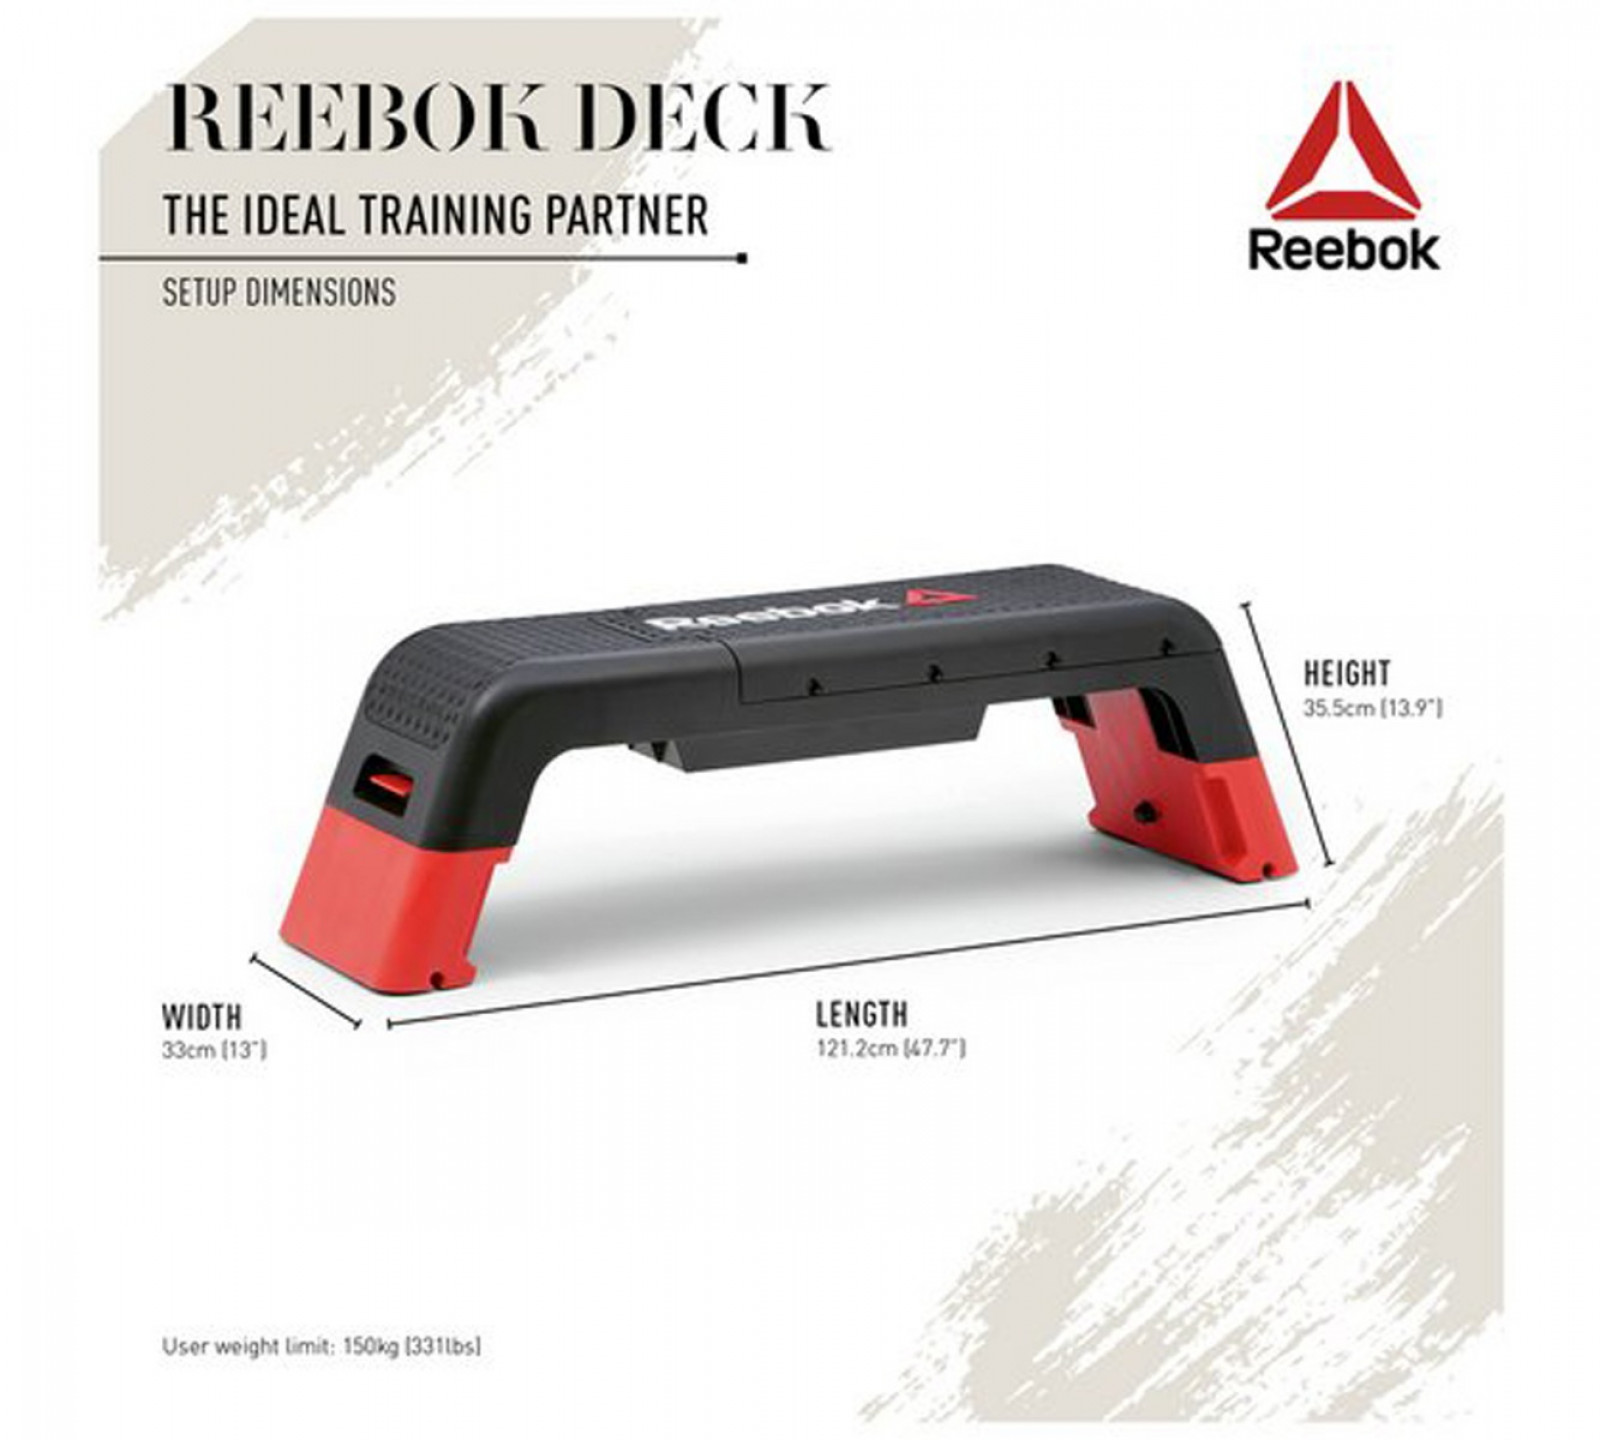 reebok deck height